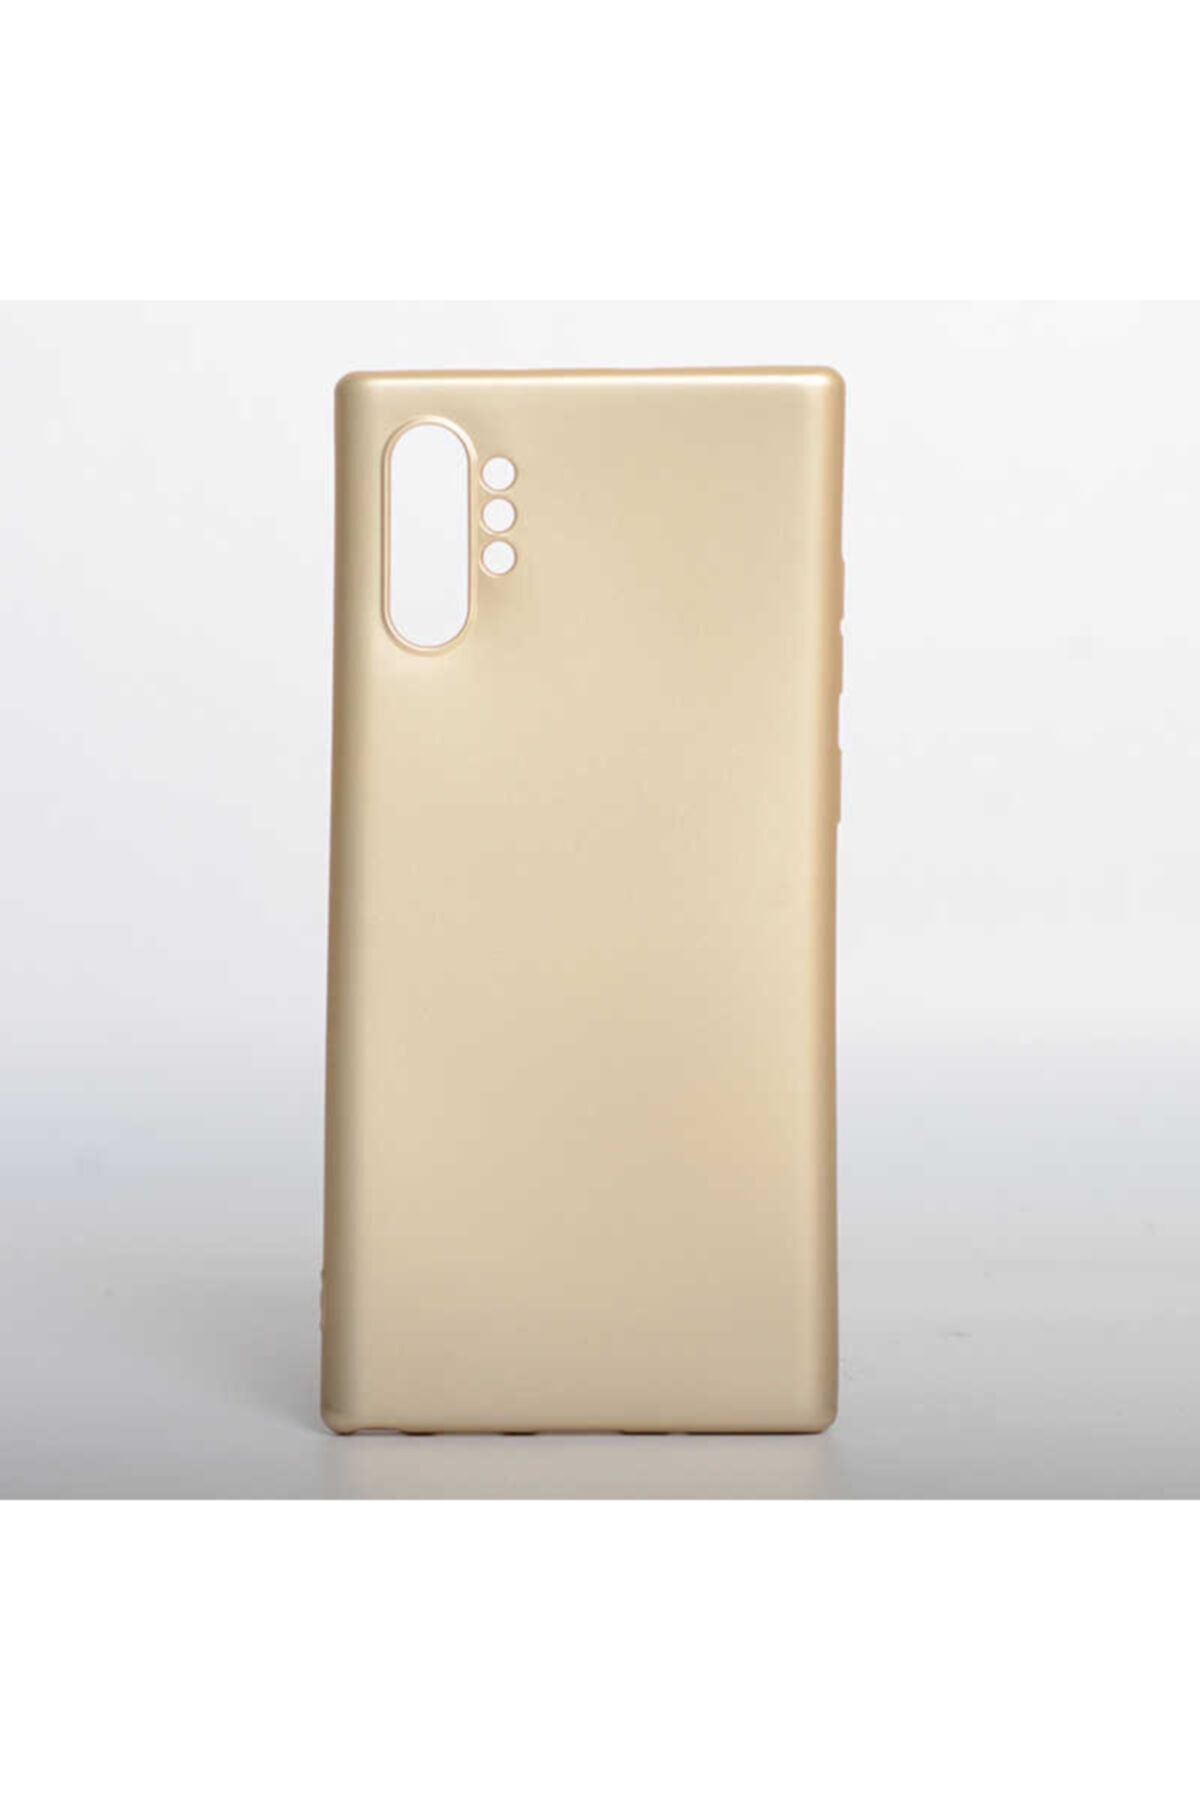 İncisoft Samsung Galaxy Note 10 Plus Kılıf Ultra Ince Silikon Yumuşak Yüzey Arka Kapak Gold